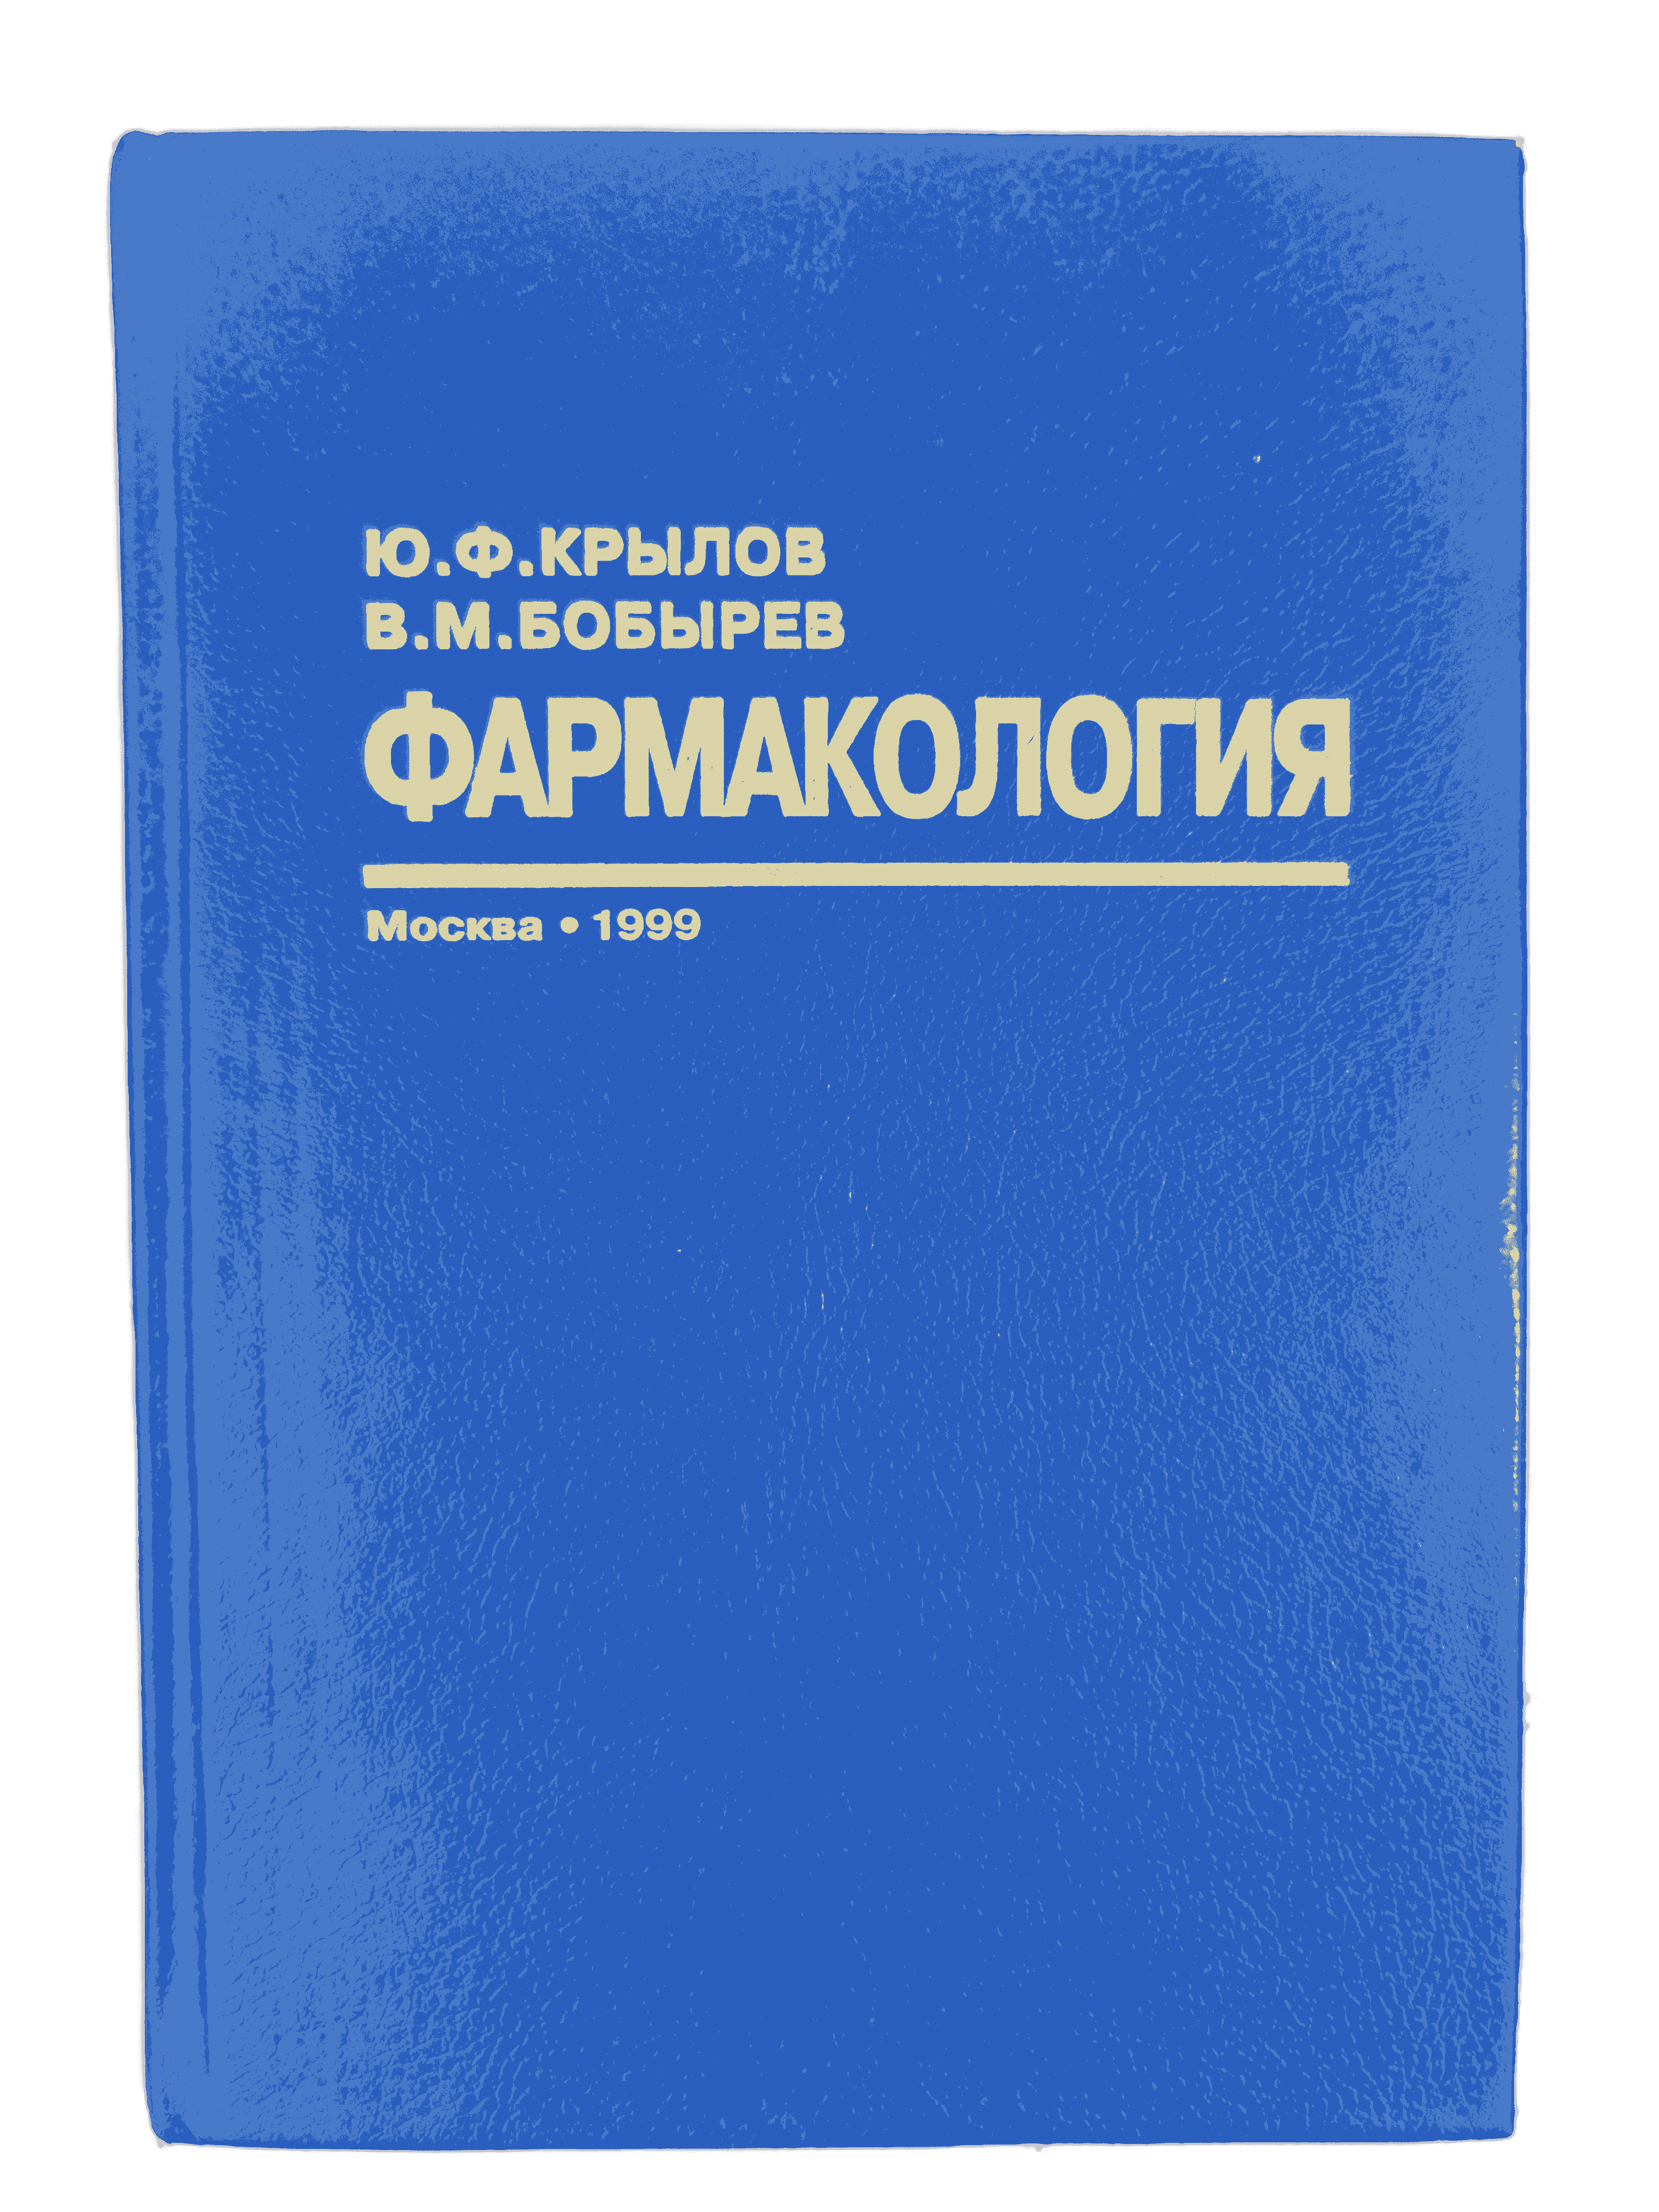 Фармакология, под. ред. Ю. Ф. Крылова и В. М. Бобырева. - Москва, 1999.